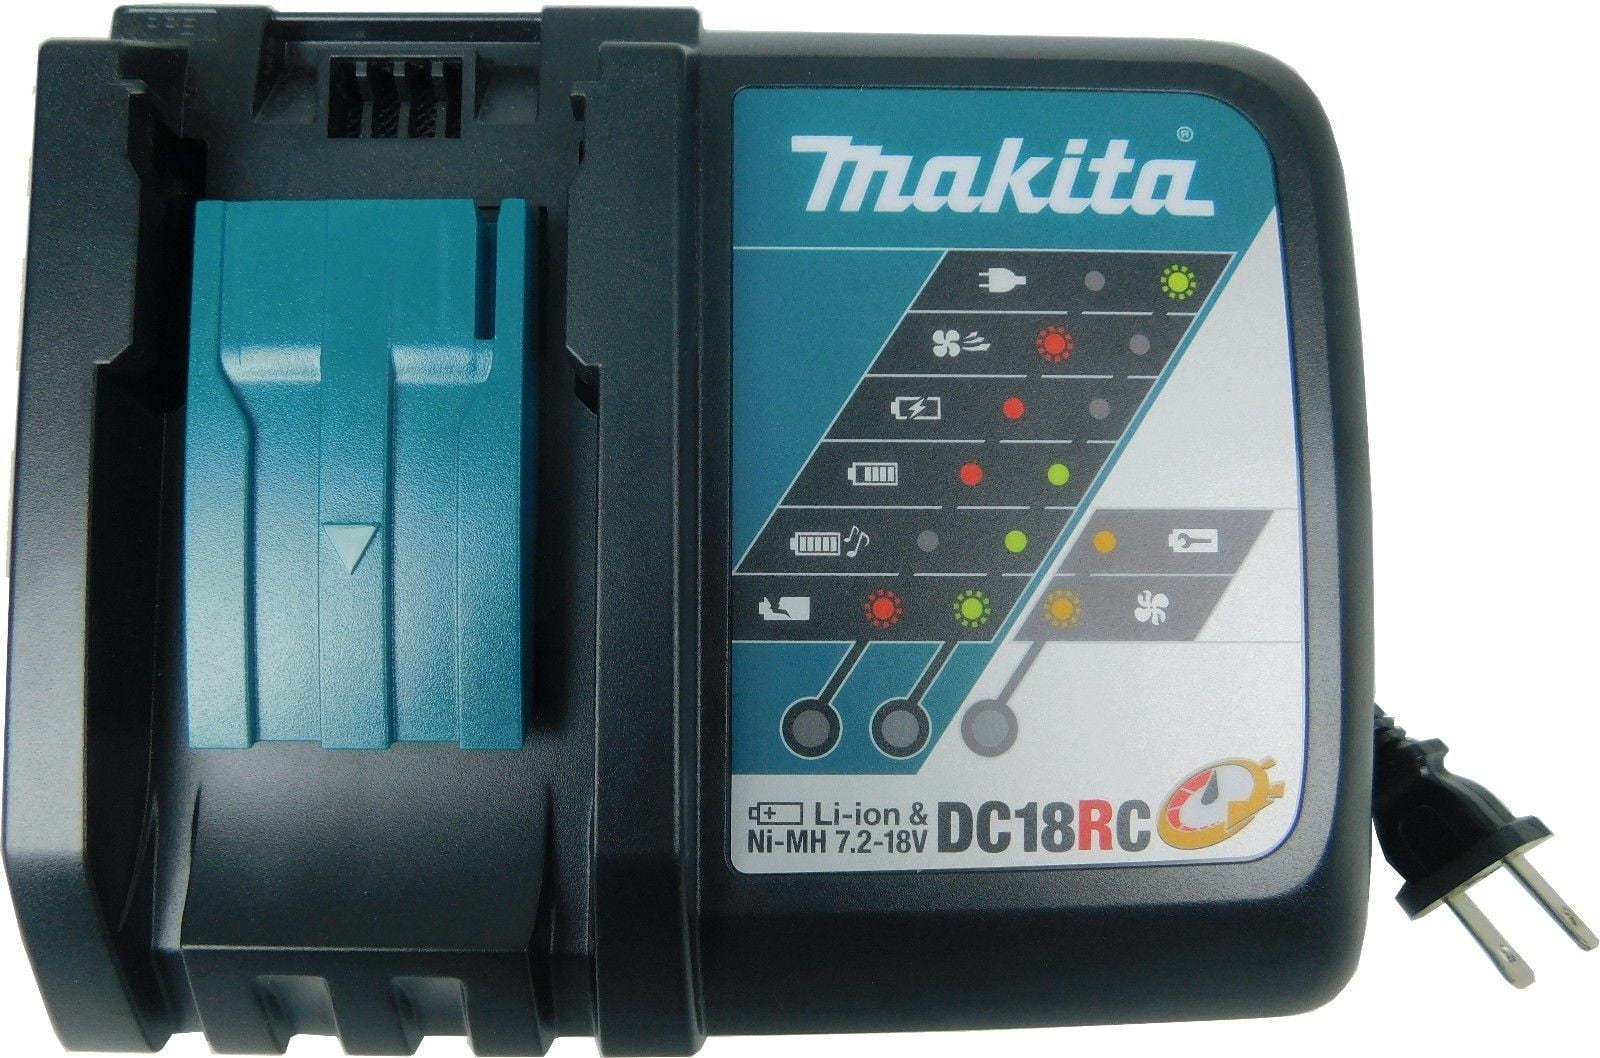 Genuine Makita Kit 6.0Ah 18v LXT Li-Ion Battery BL1860B & DC18RC Fast Charger